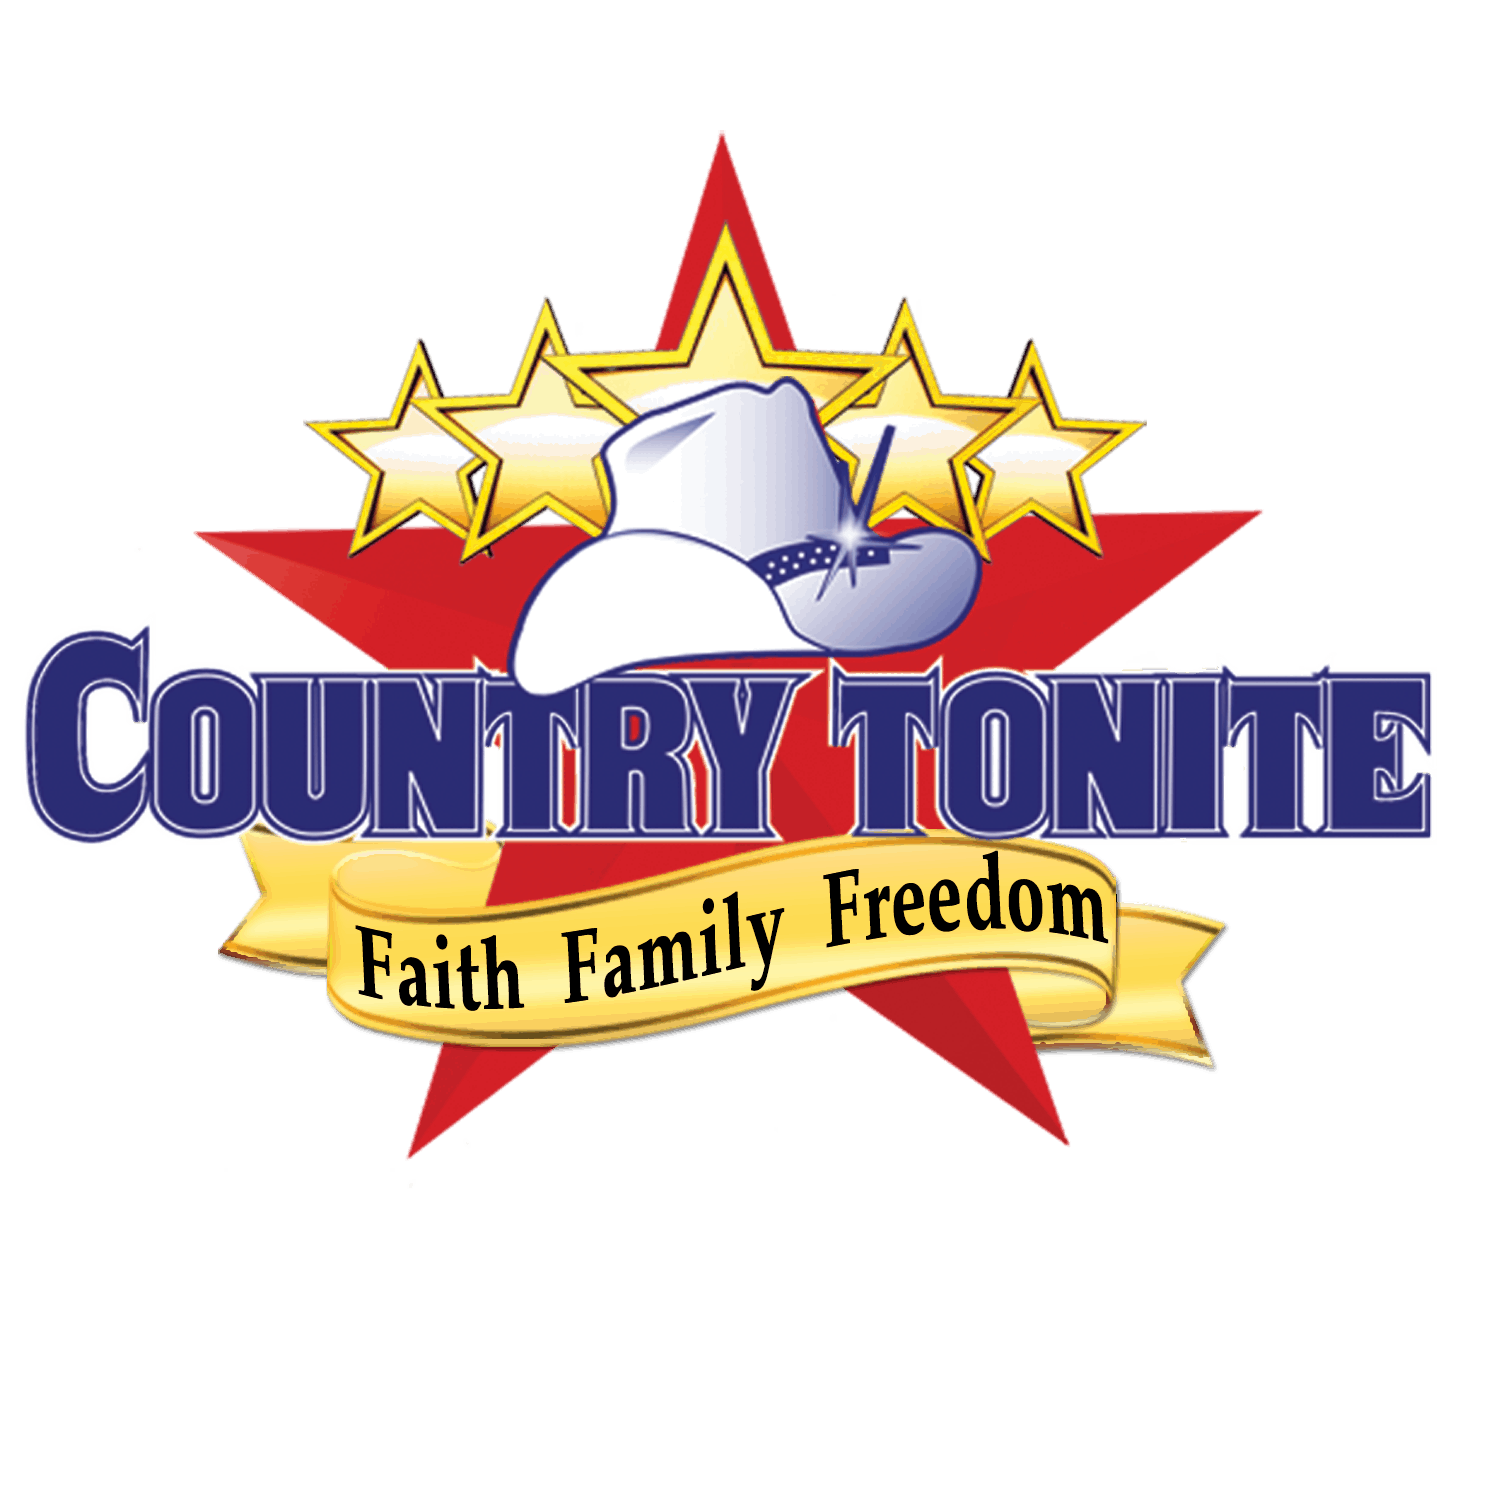 country tonite logo